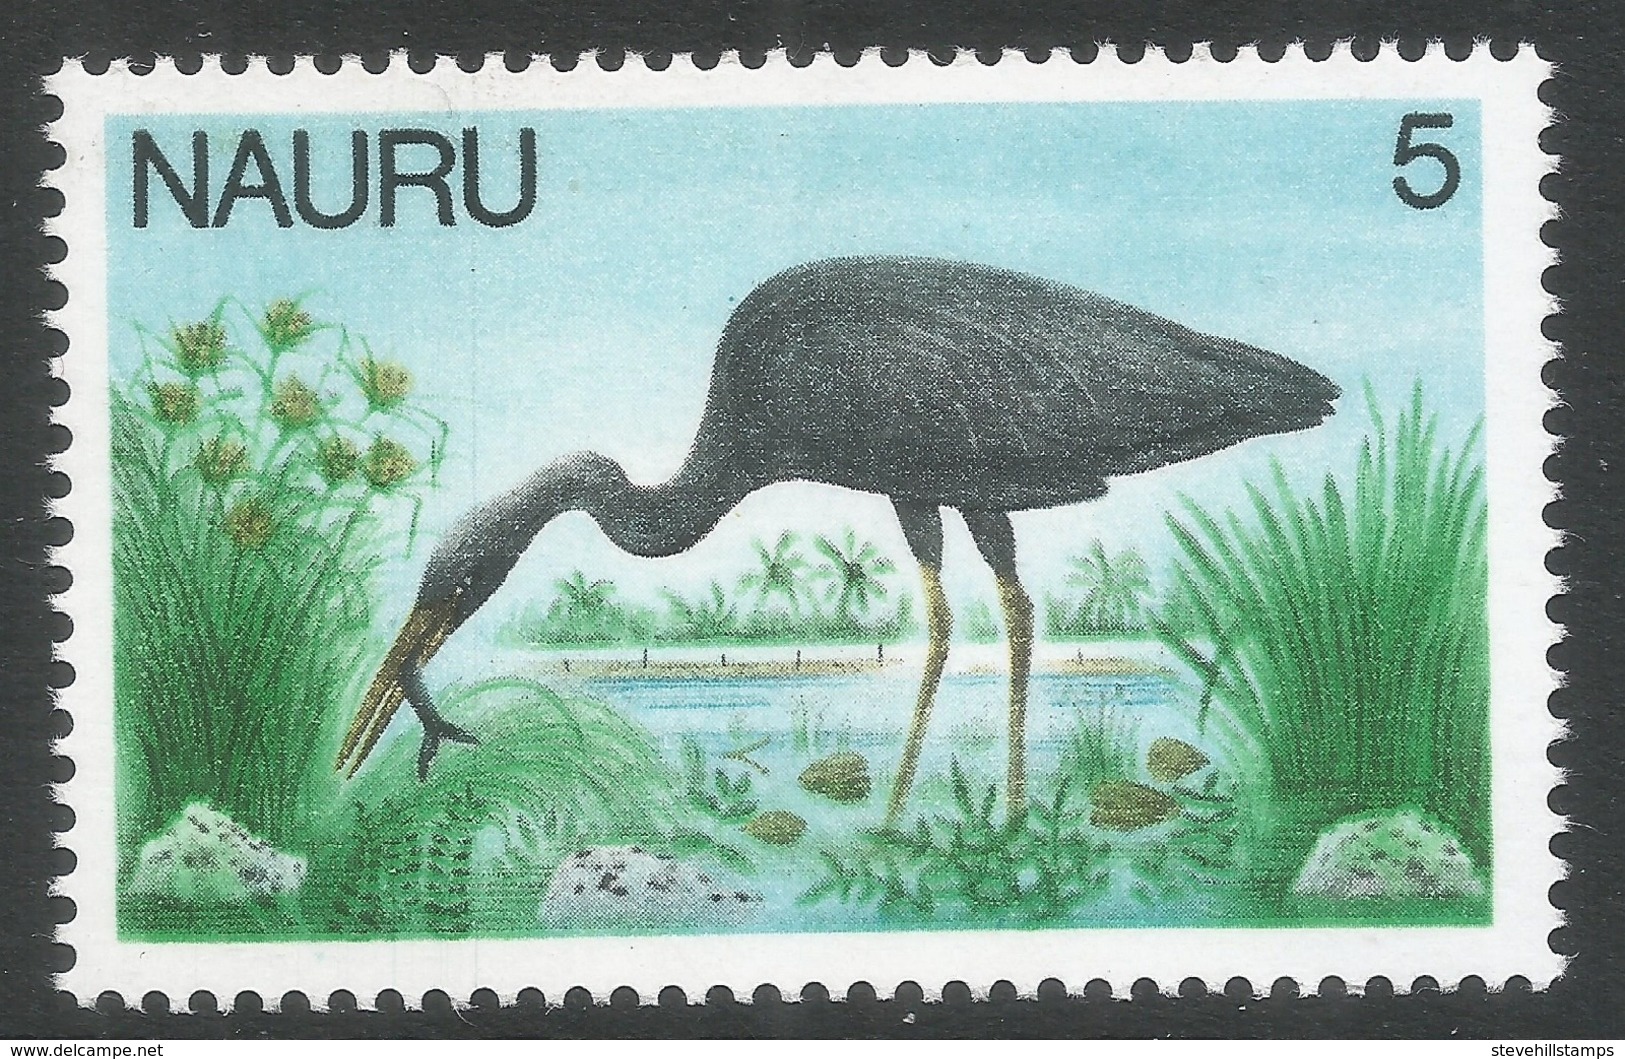 Nauru. 1978 Definitives. 5c MH. SG 178 - Nauru